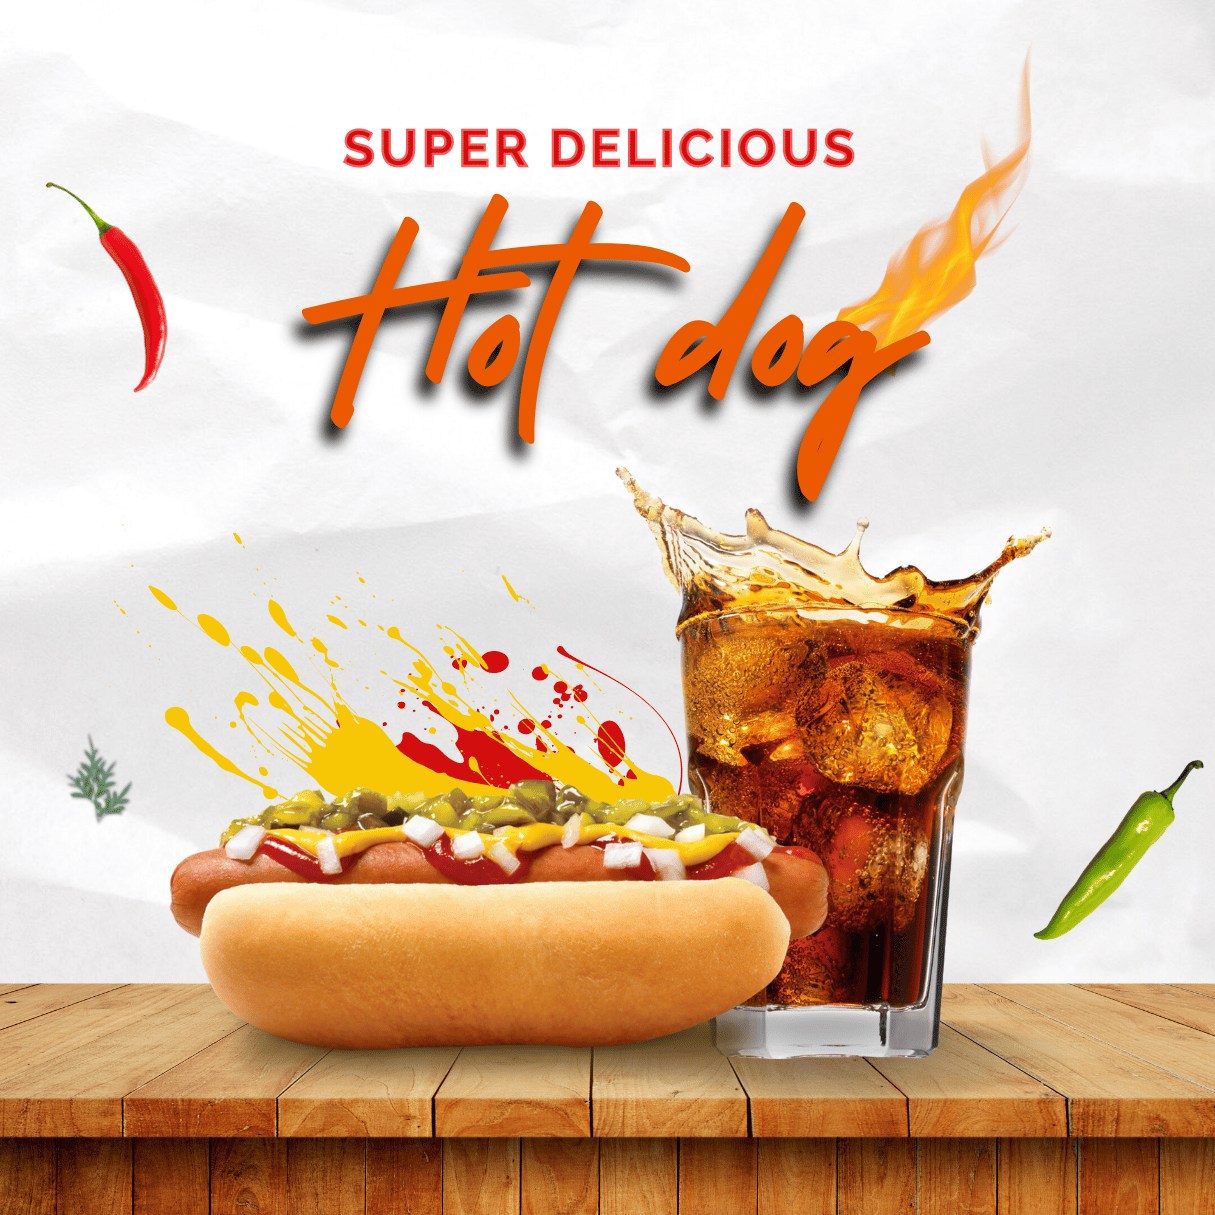 Super Hot Dog pinterest preview image.